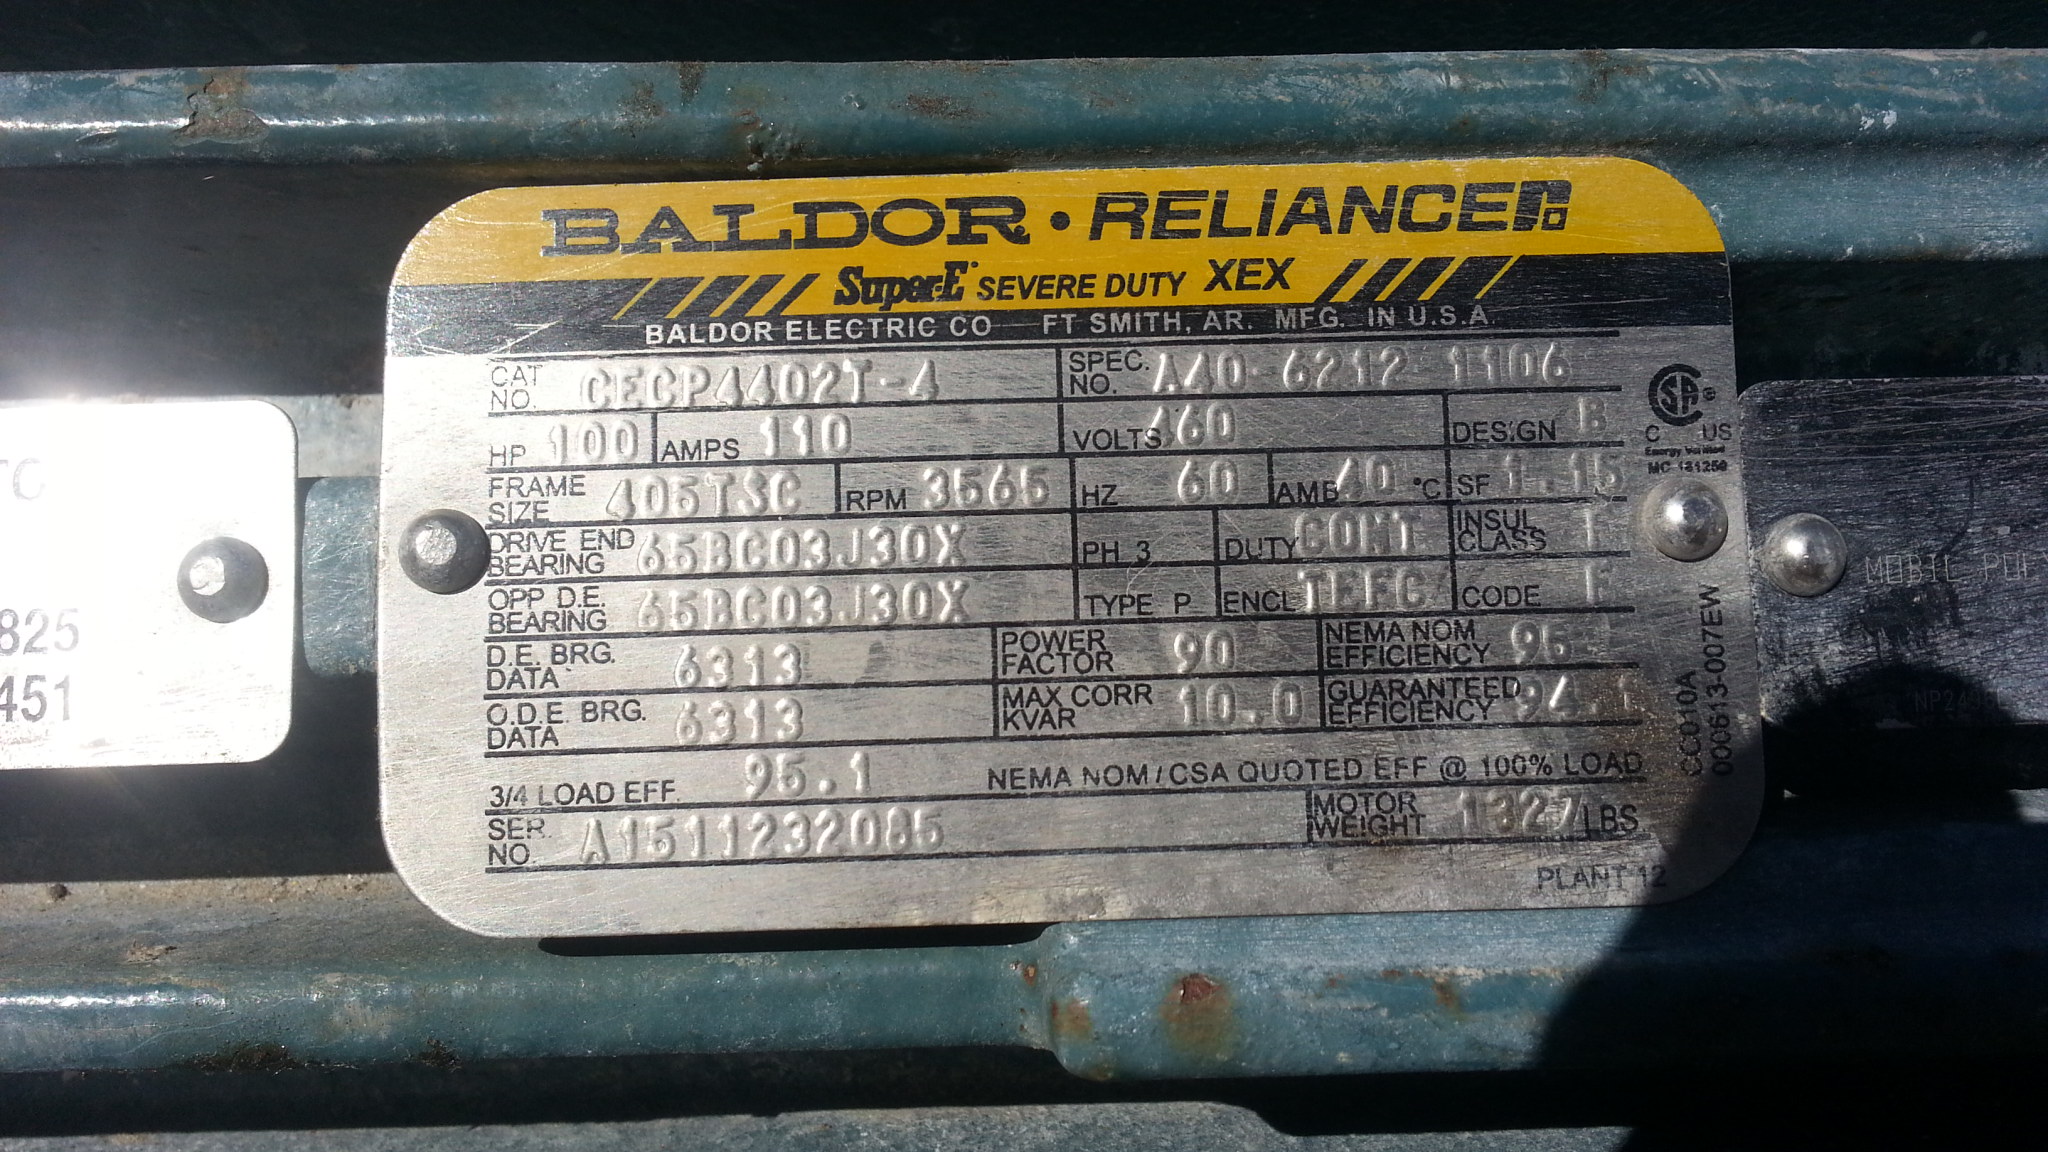 Baldor-Reliance 100 HP 3600 RPM 405TSC Squirrel Cage Motors H0566